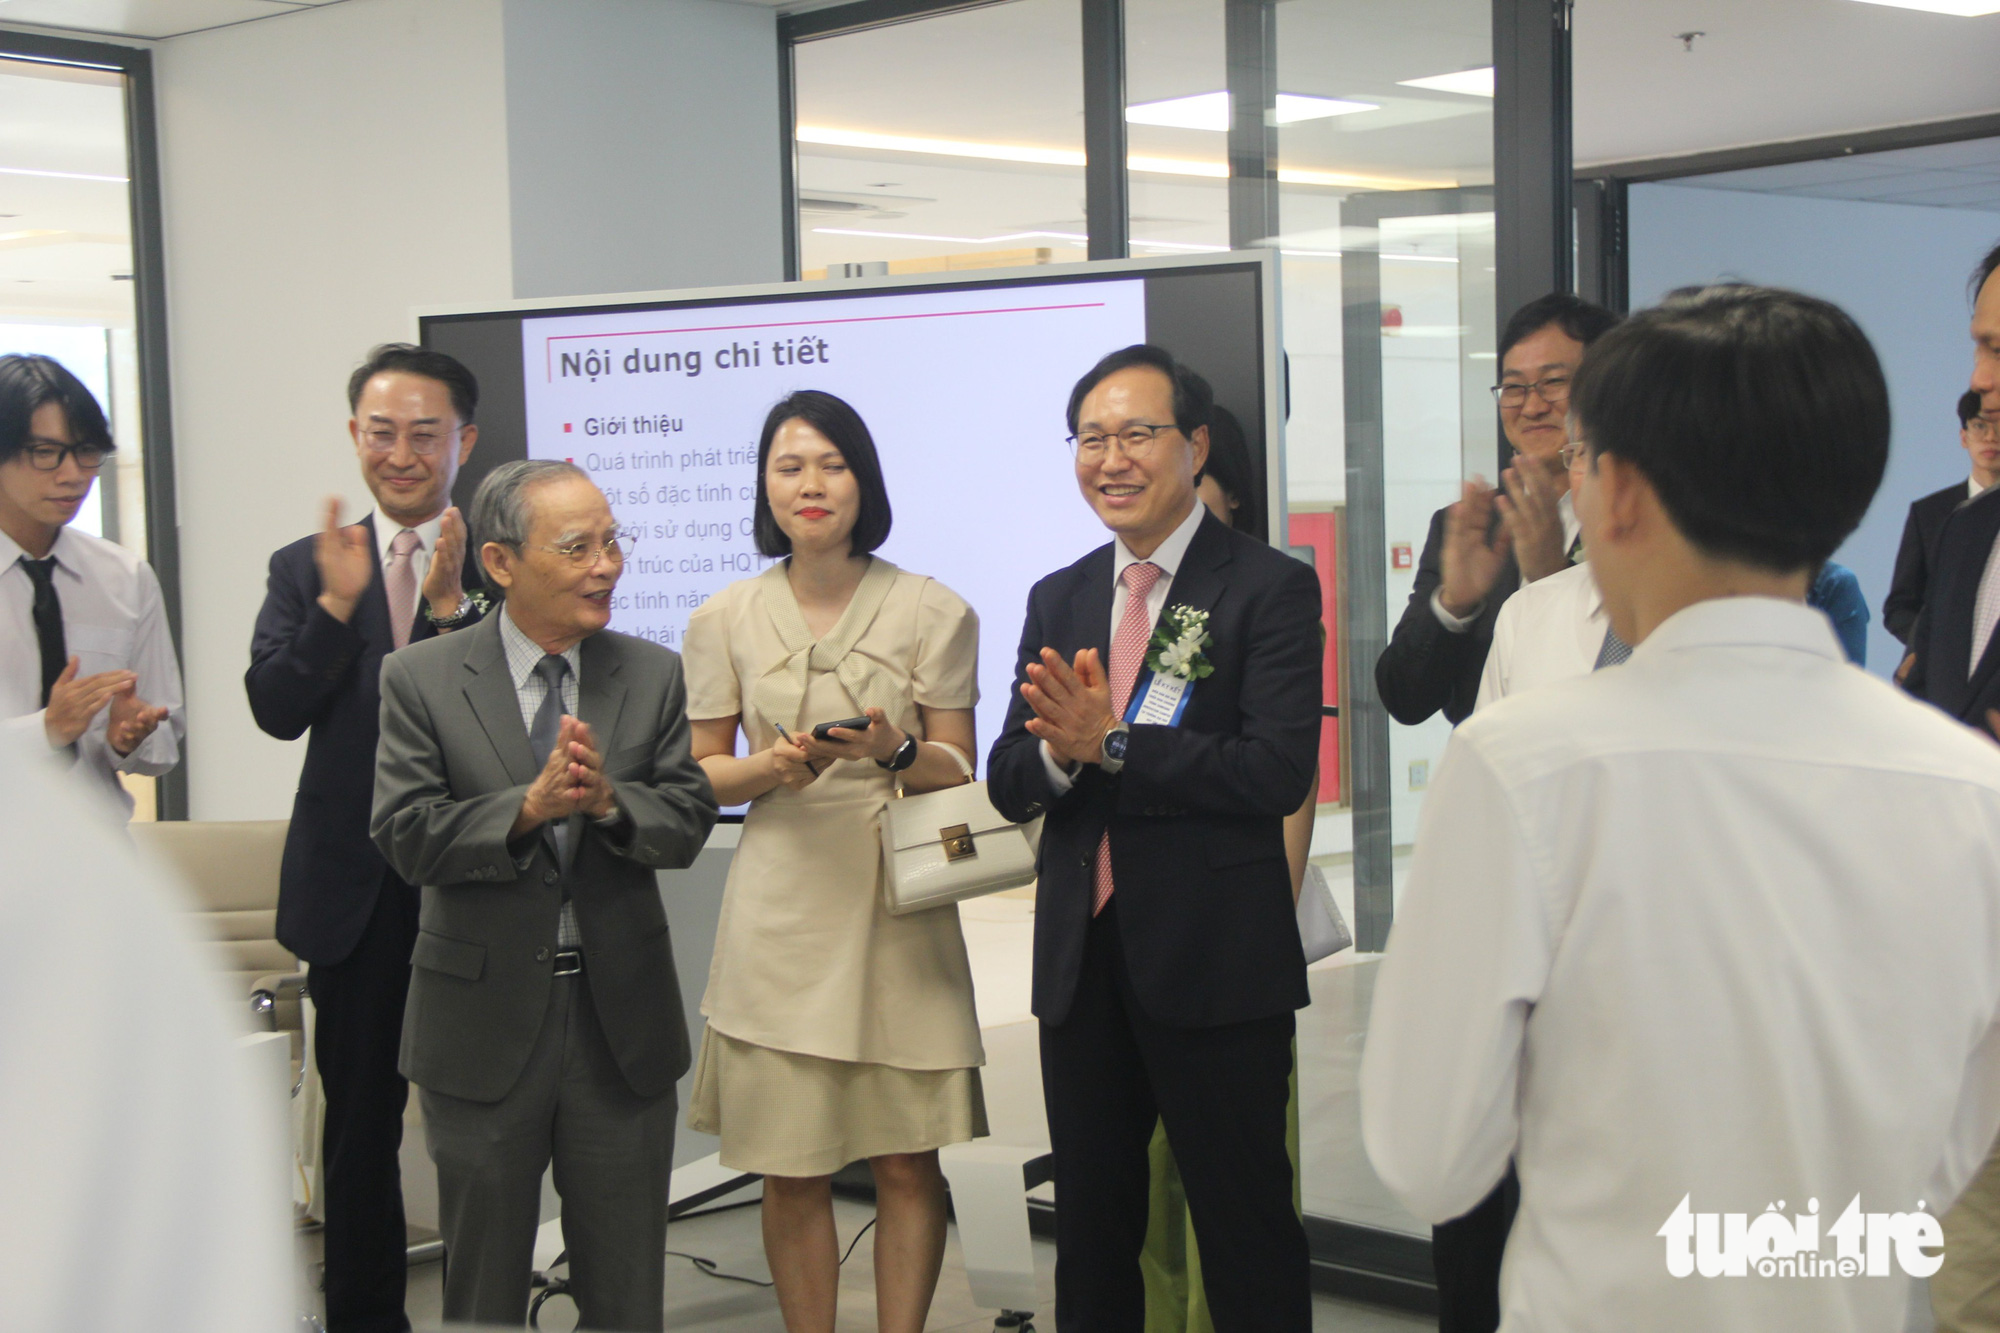 Samsung Vietnam launches technology education program in Da Nang